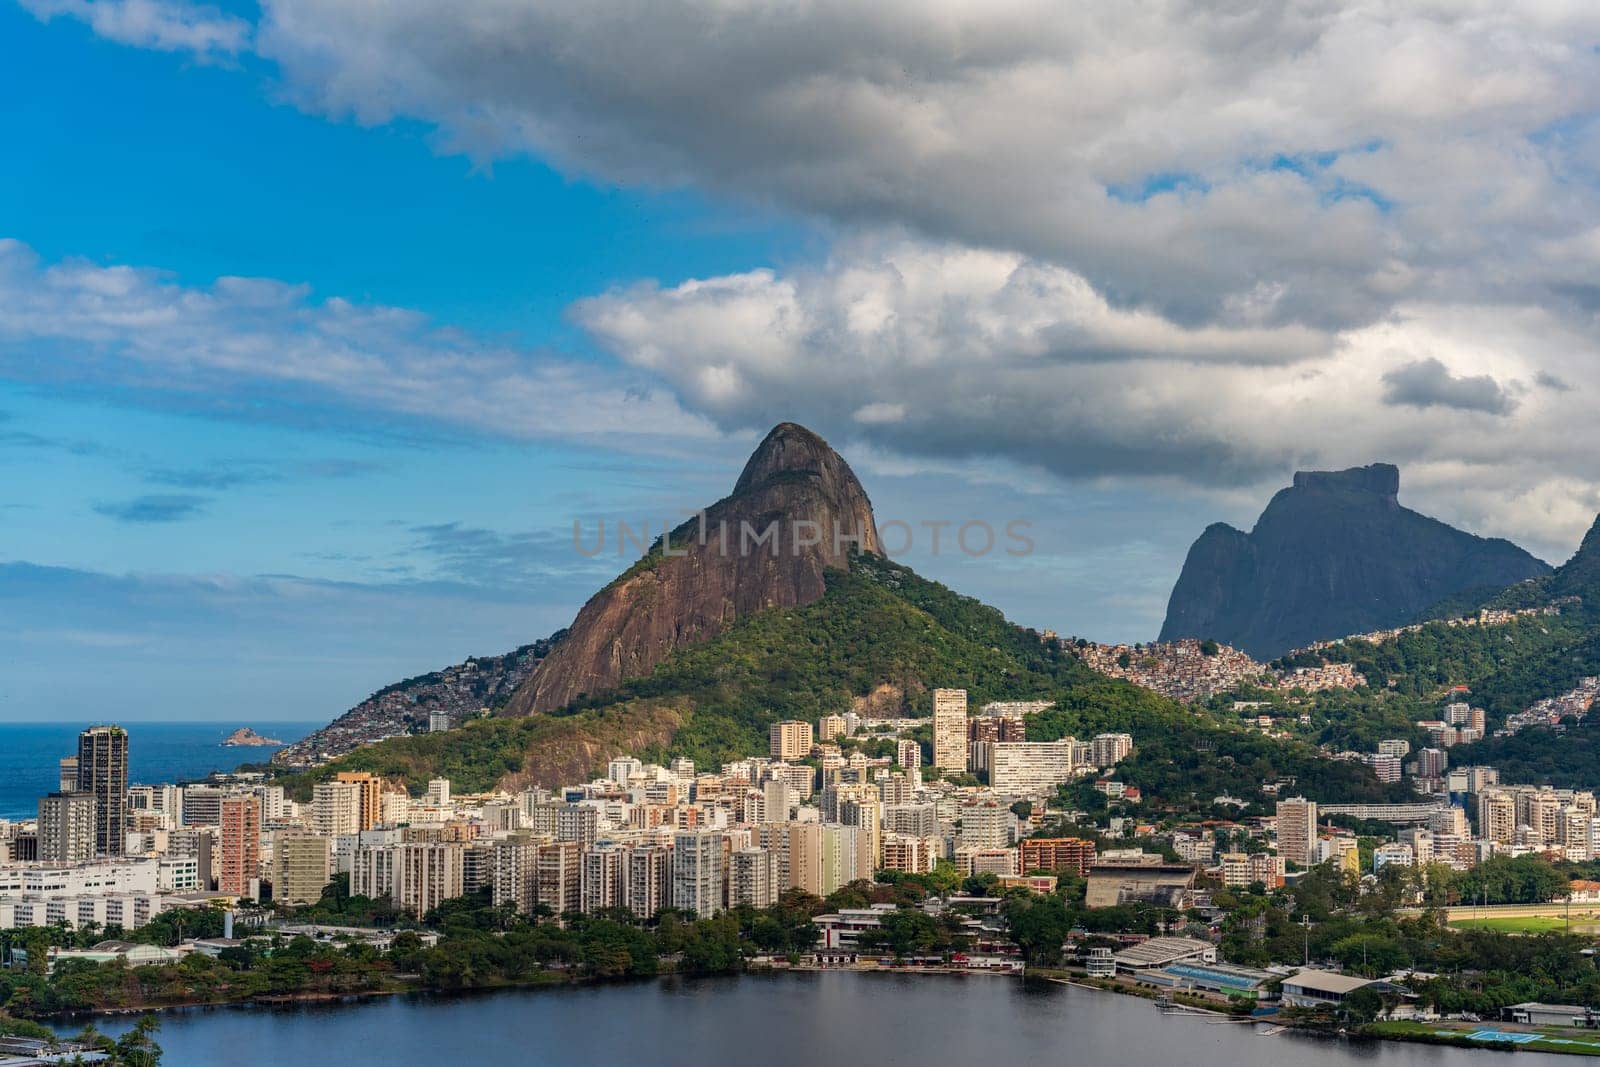 Luxury Rio skyline near Lagoa with Rocinha favela and Pedra da Gavea in sight.